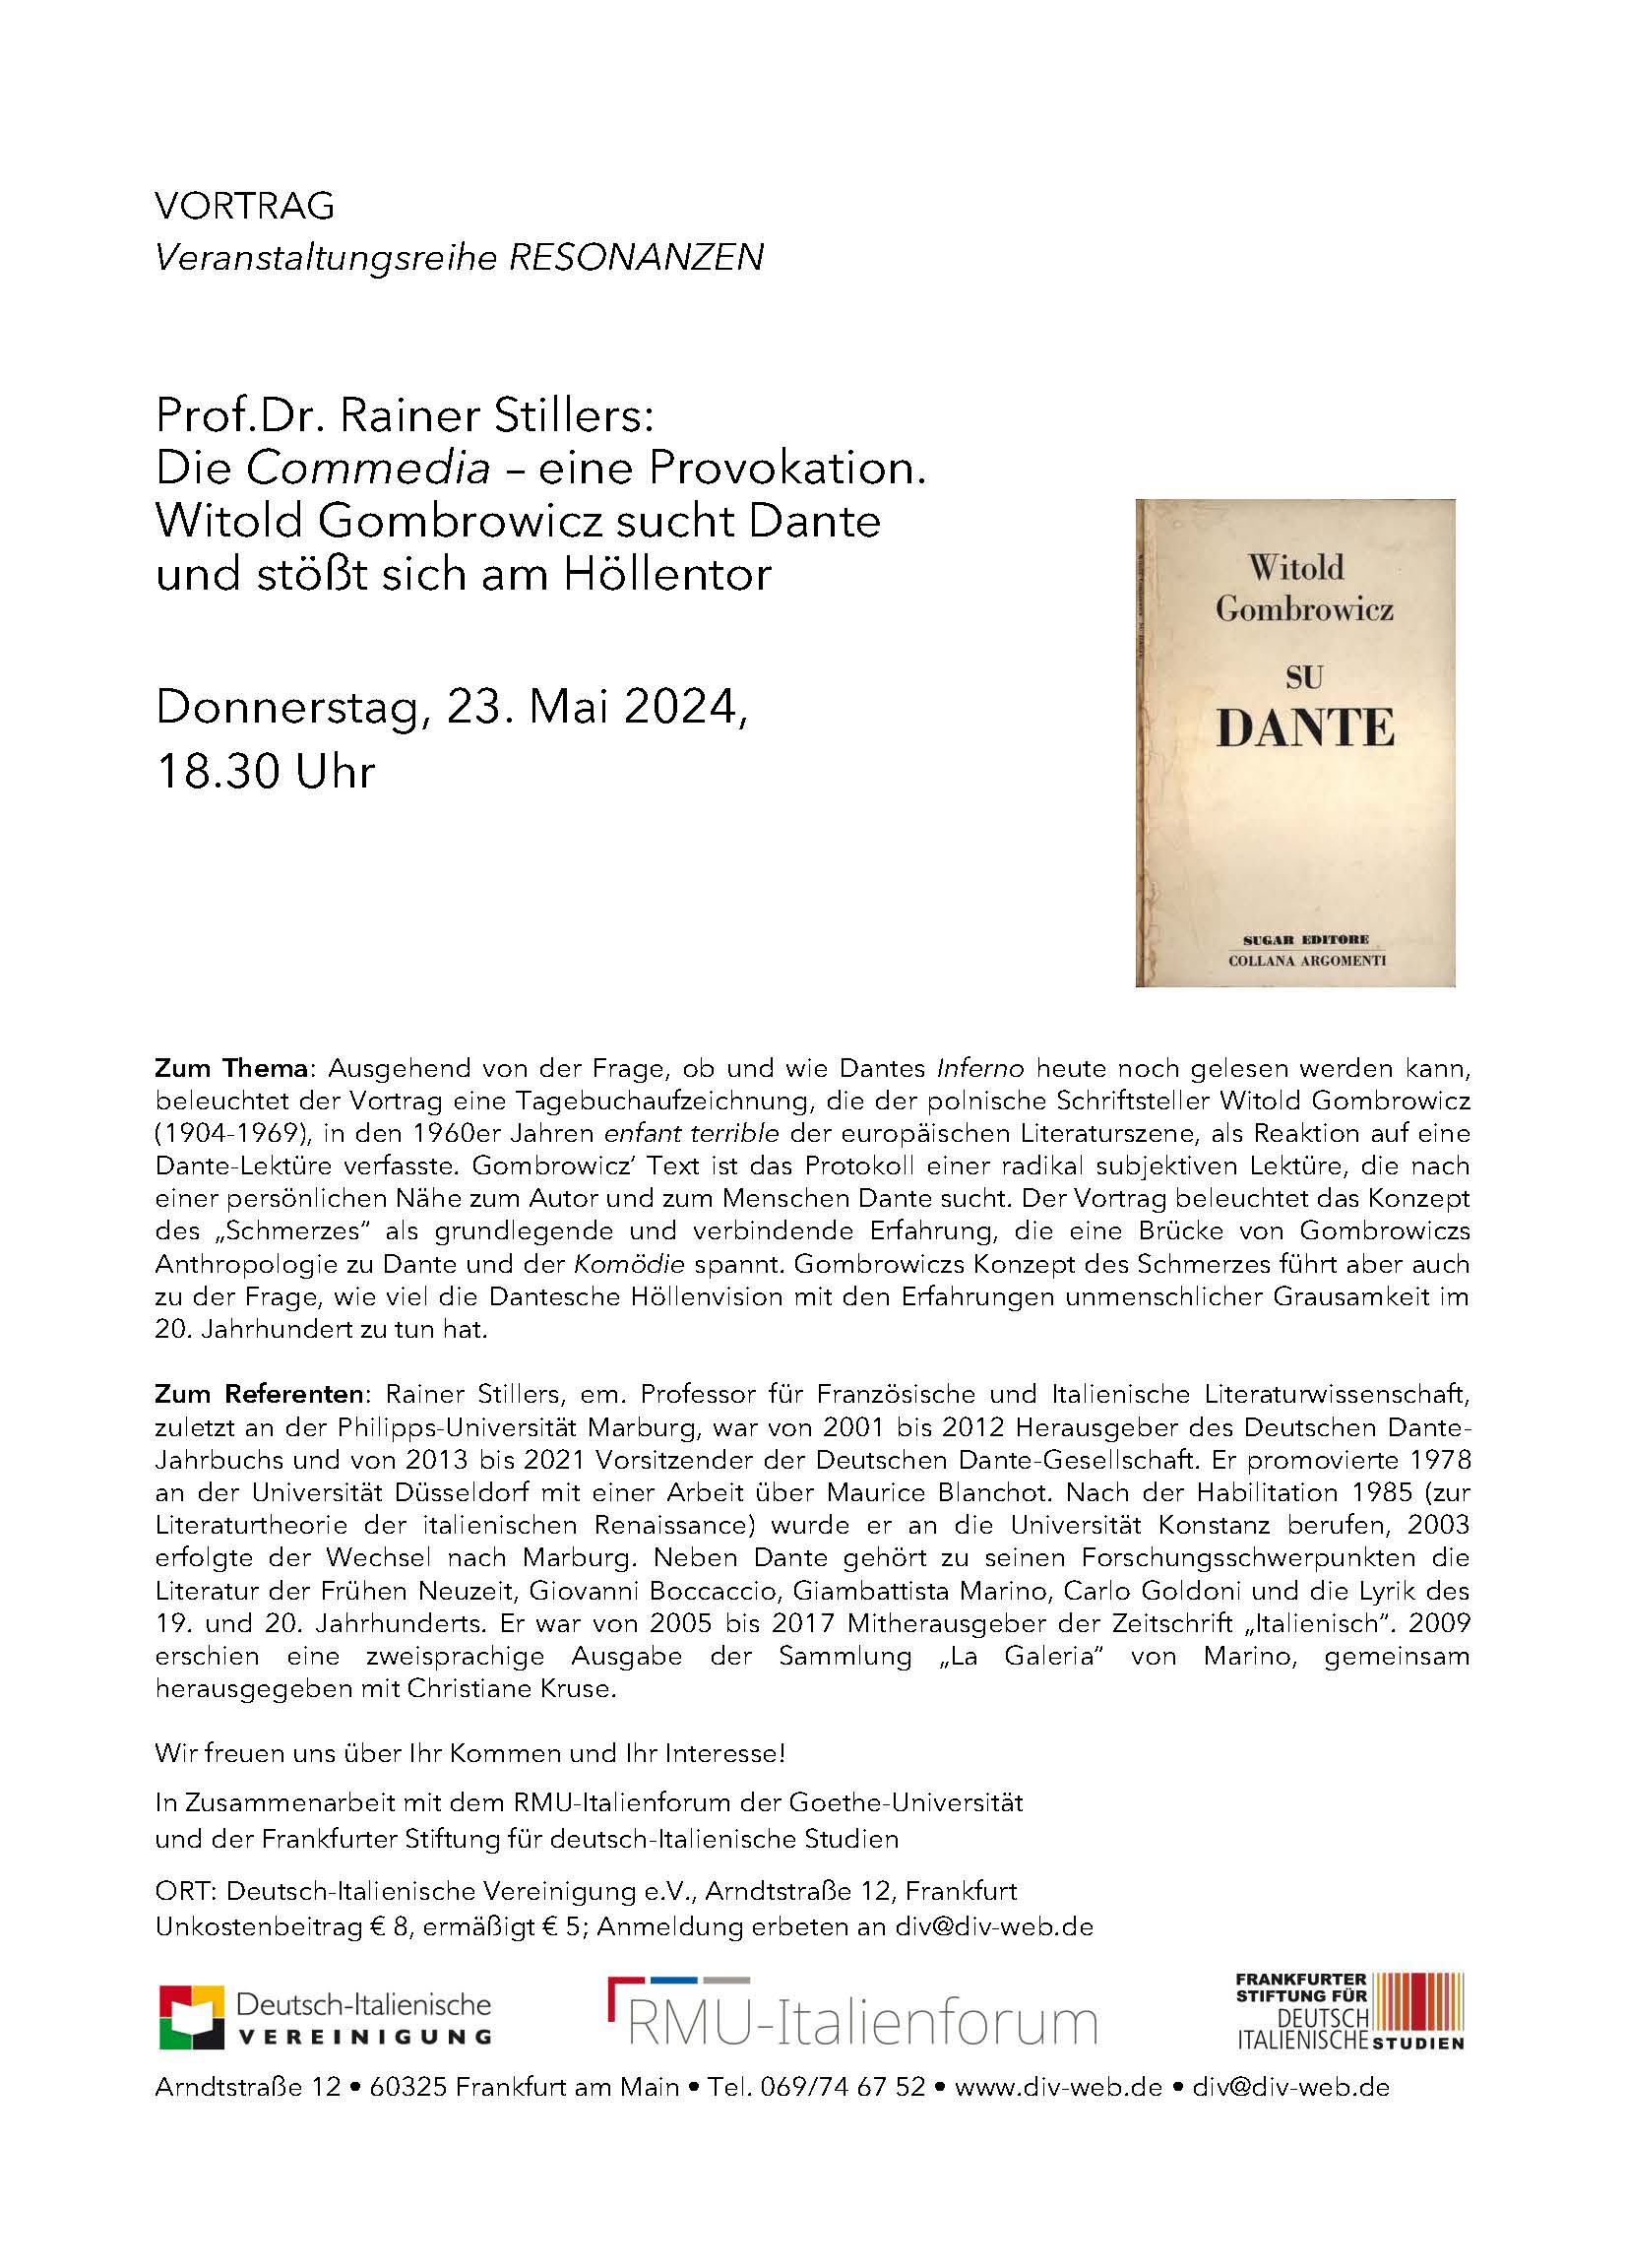 Vortrag Rainer Stillers Dante 23.5.2024